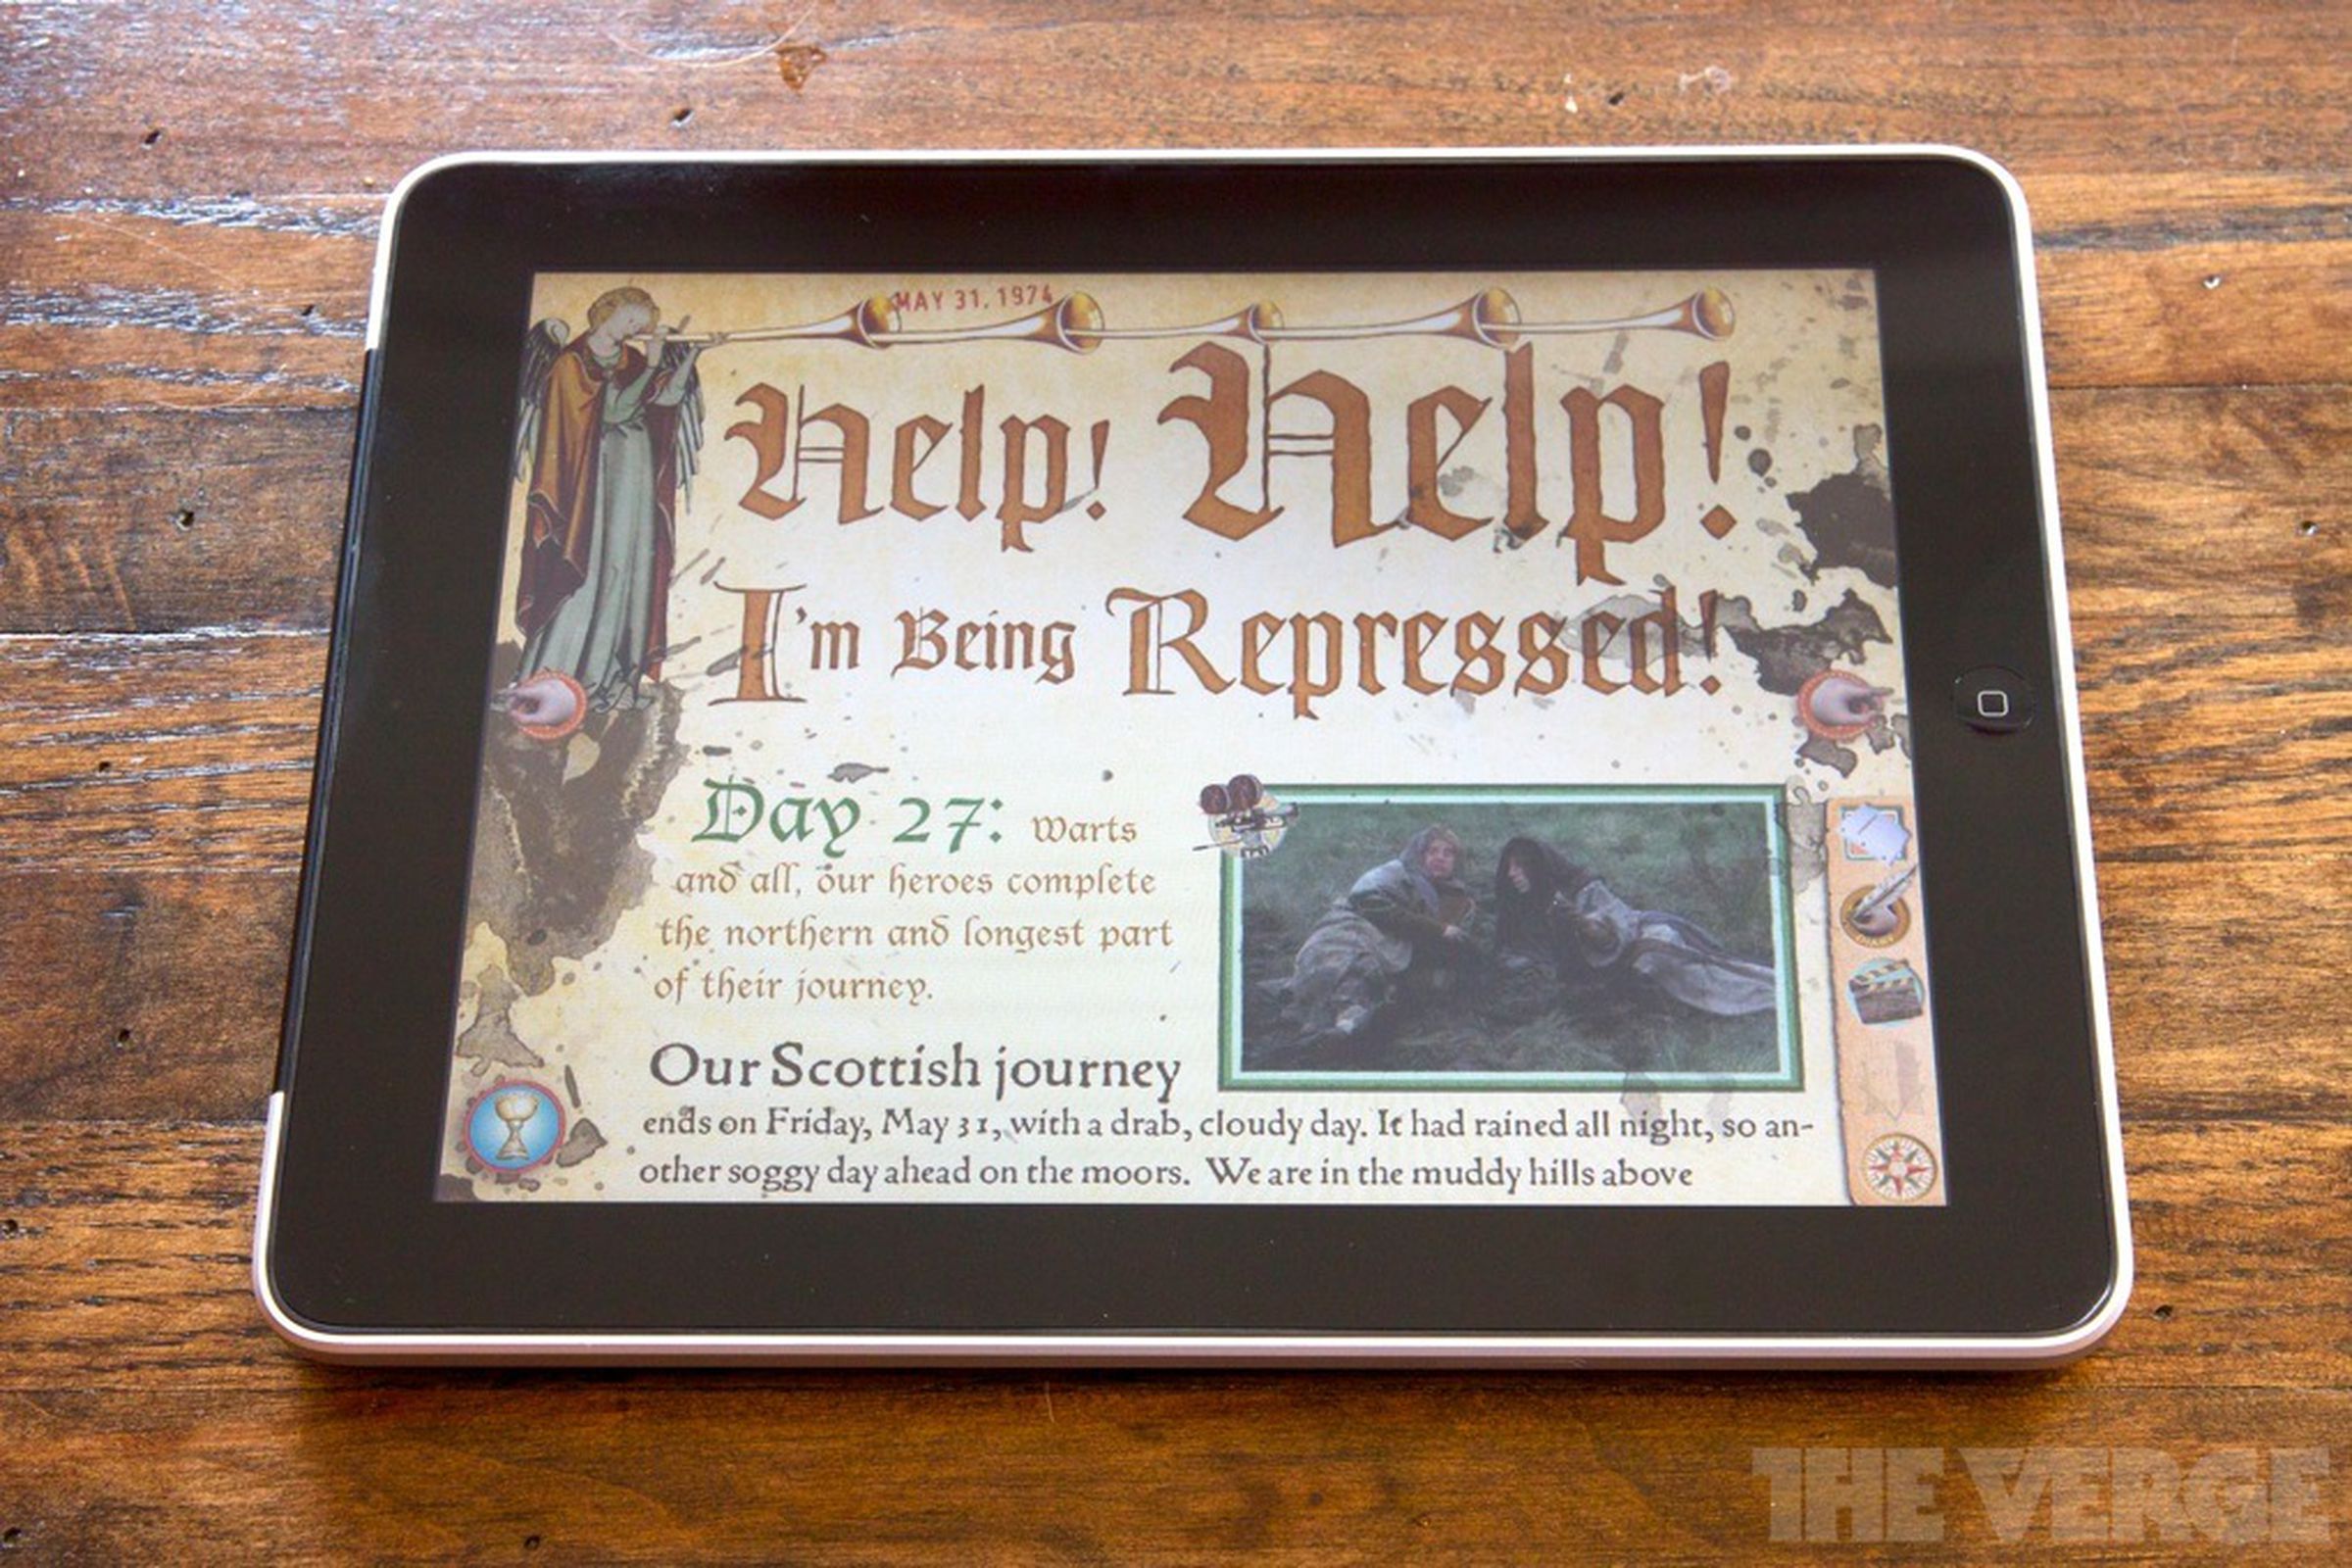 Monty Python iPad app